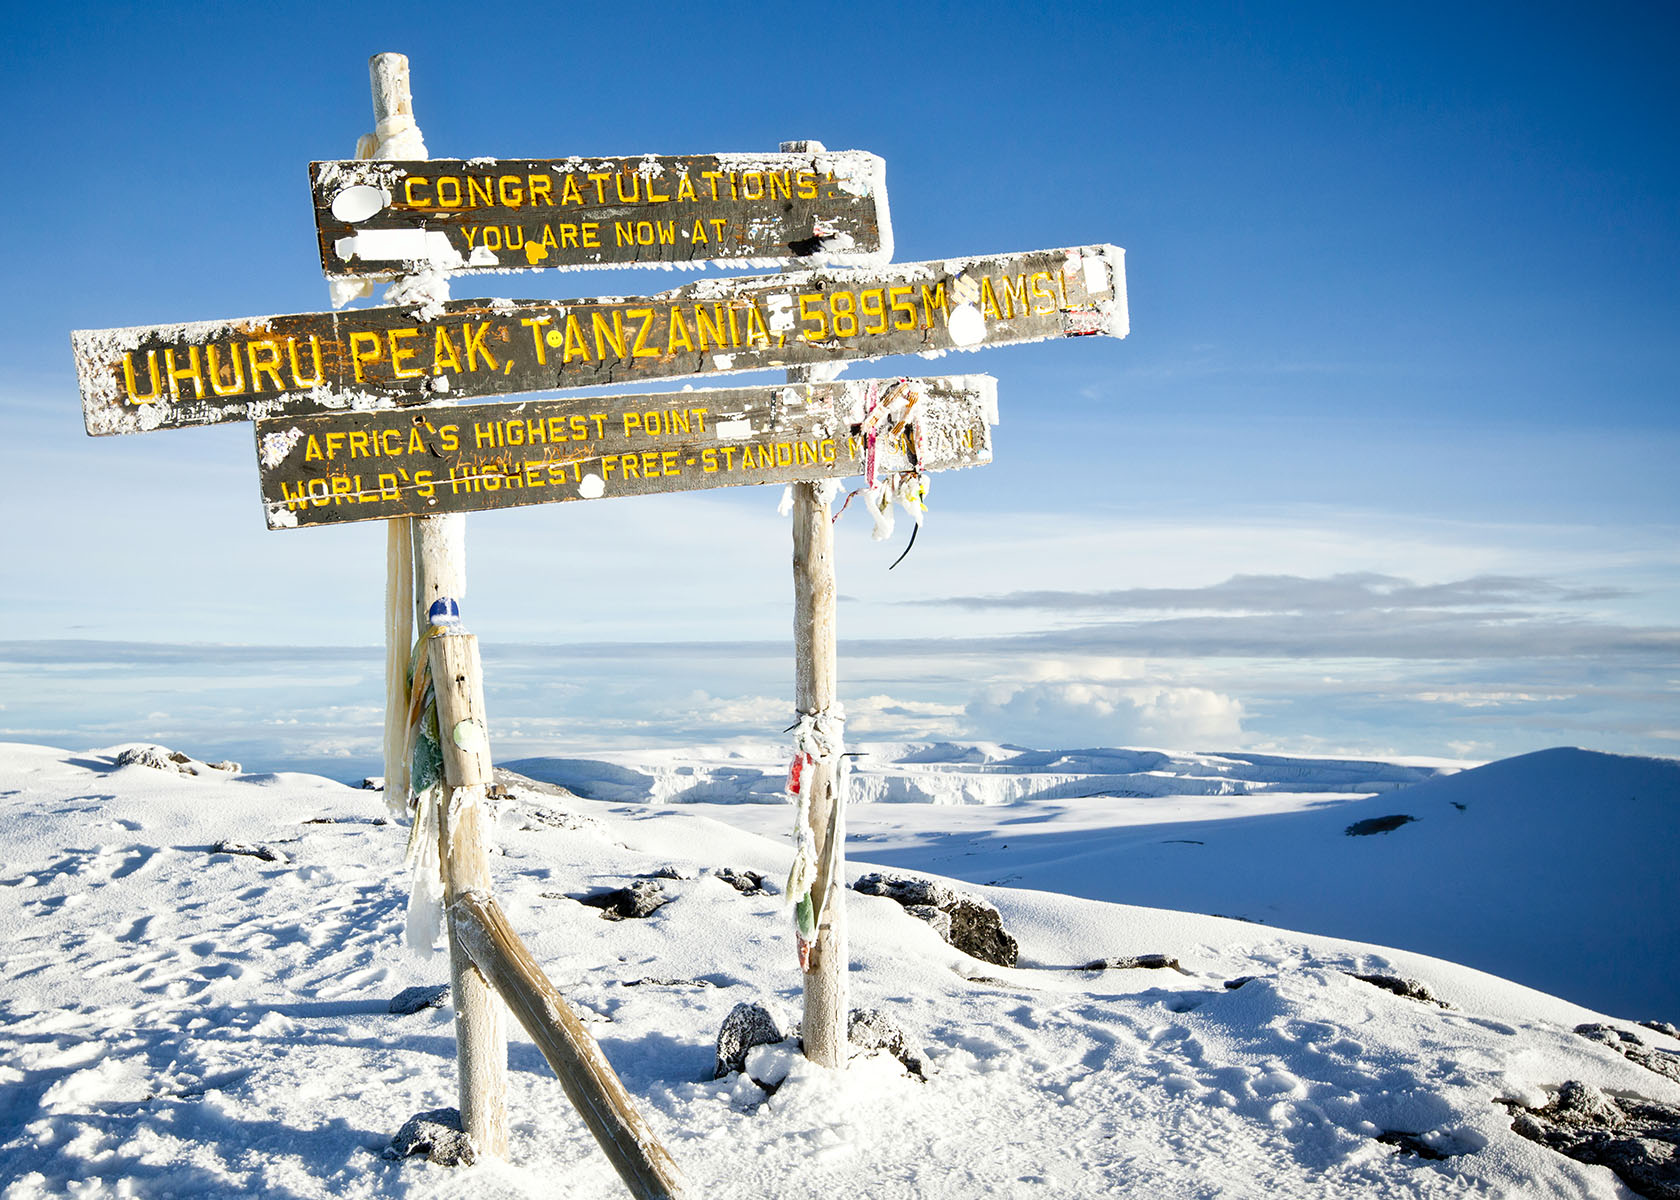 7days-kilimanjaro-machame-climbing-route